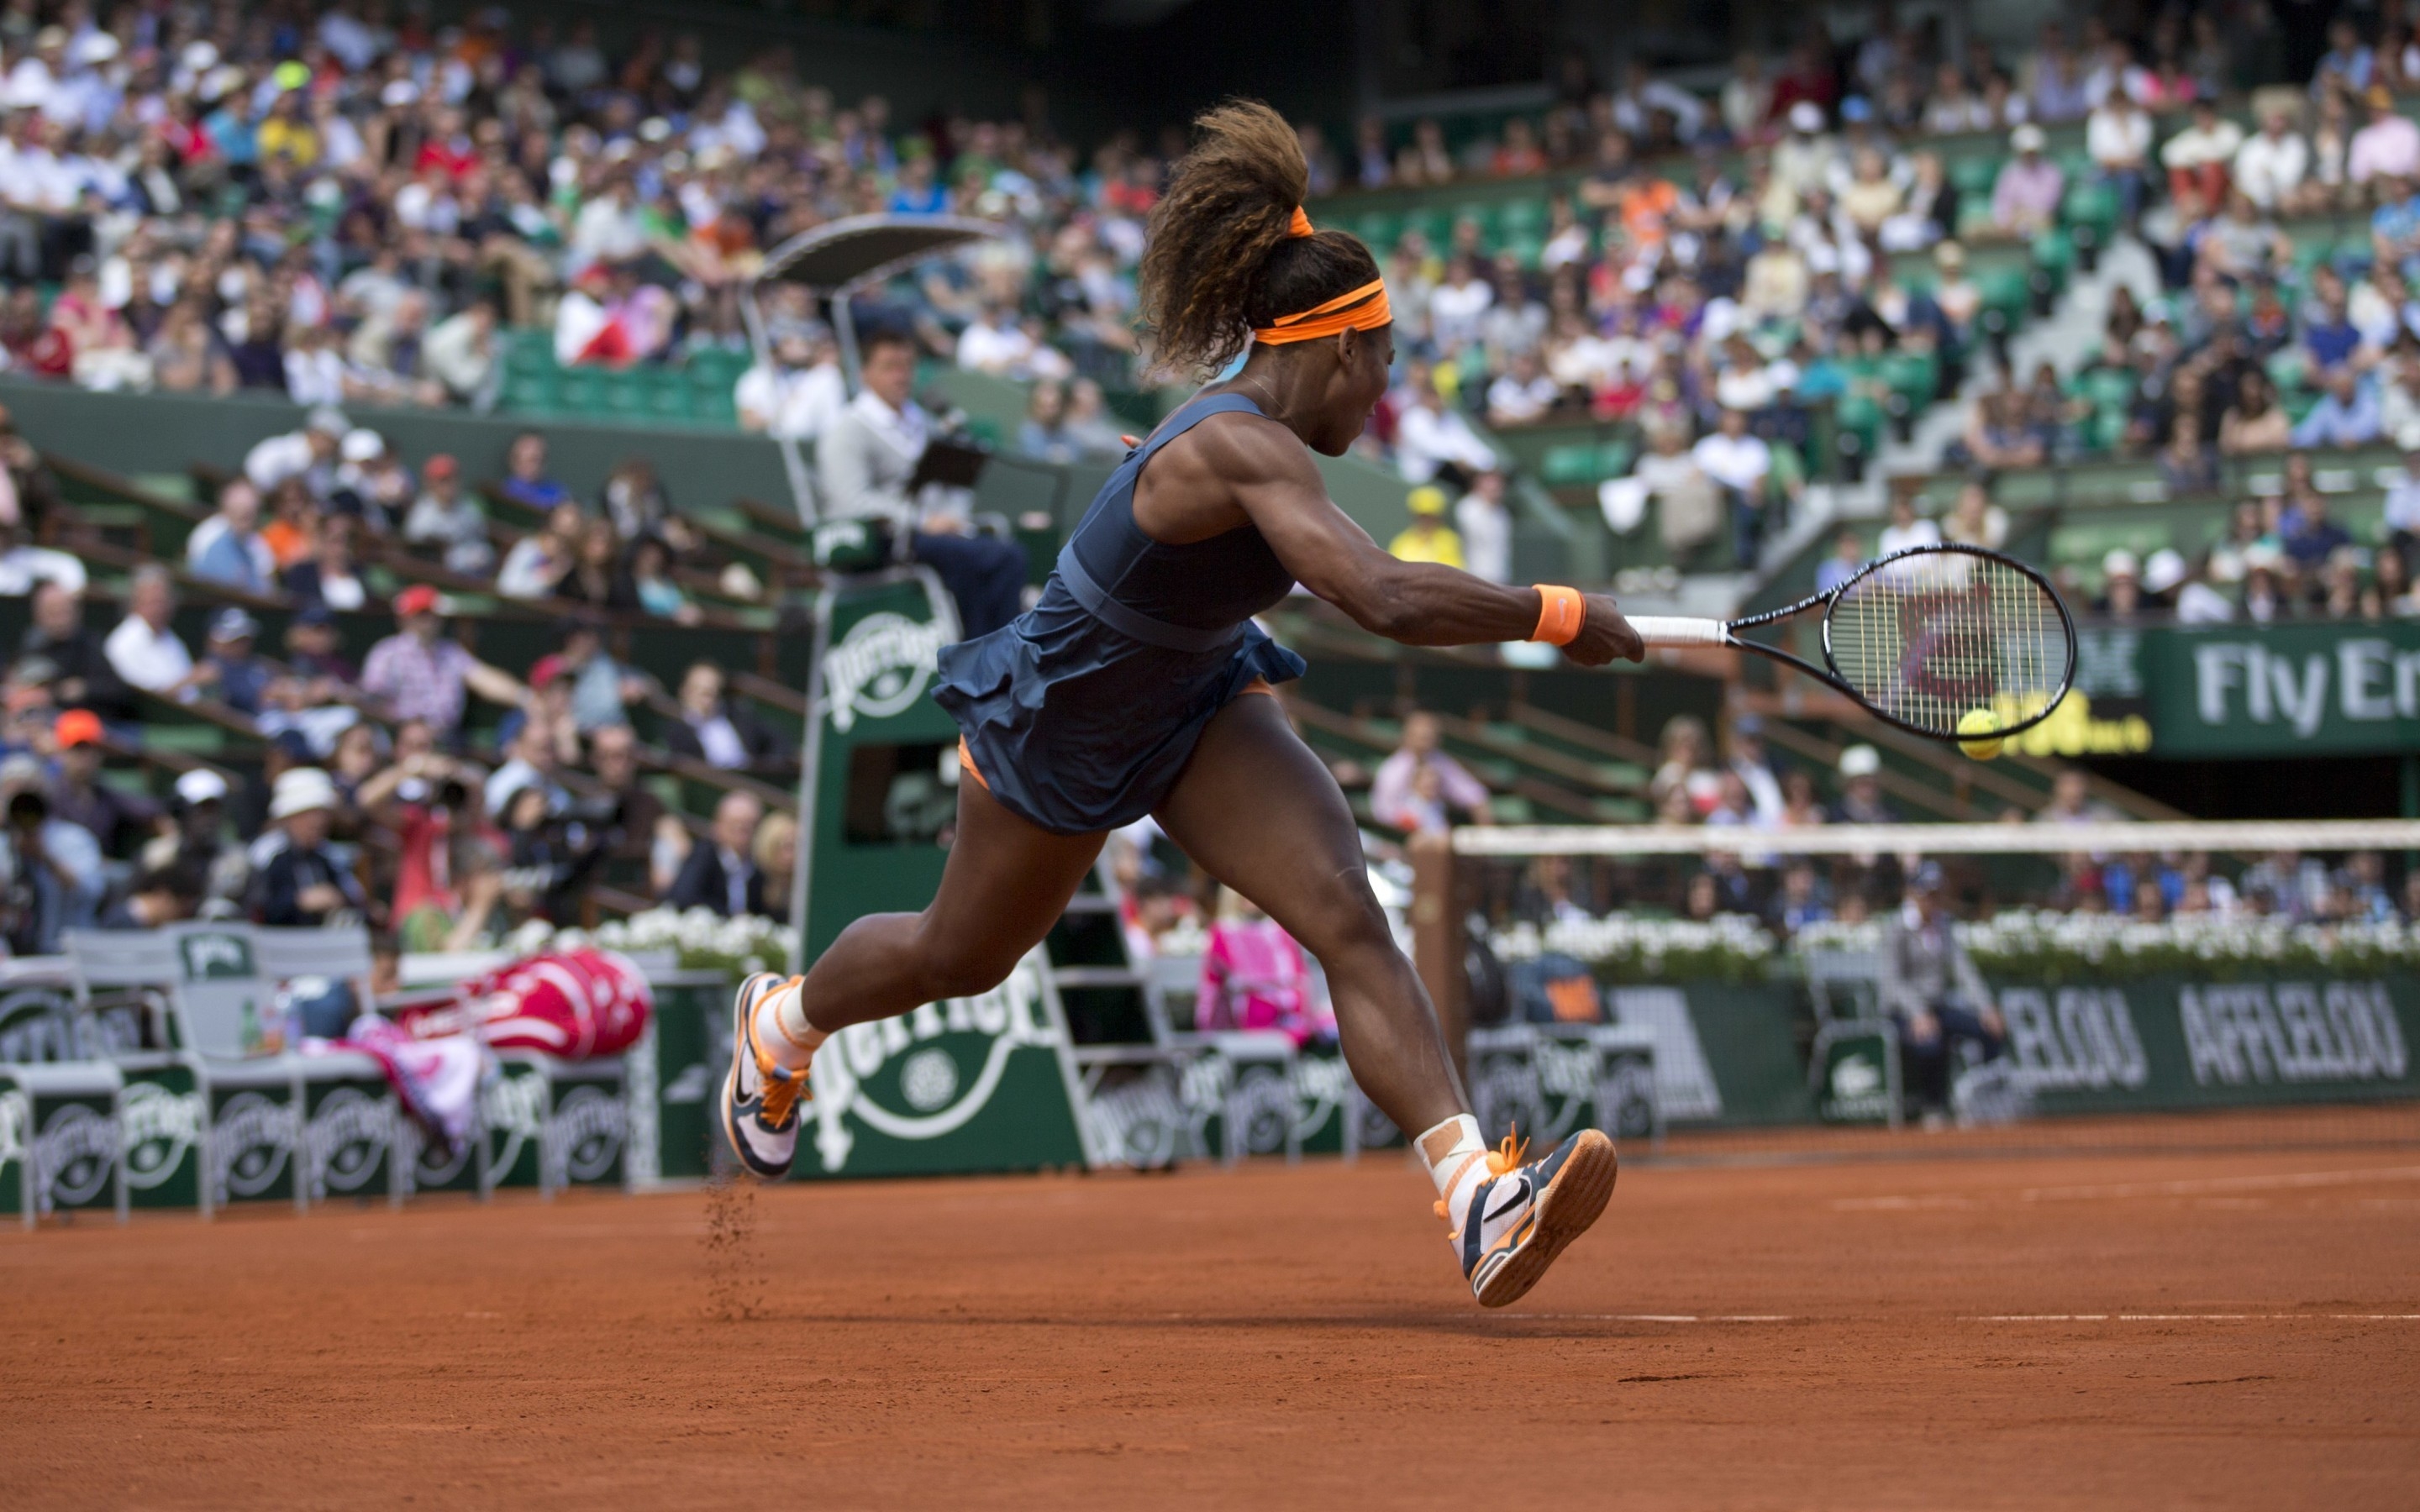 Serena Williams for 2880 x 1800 Retina Display resolution